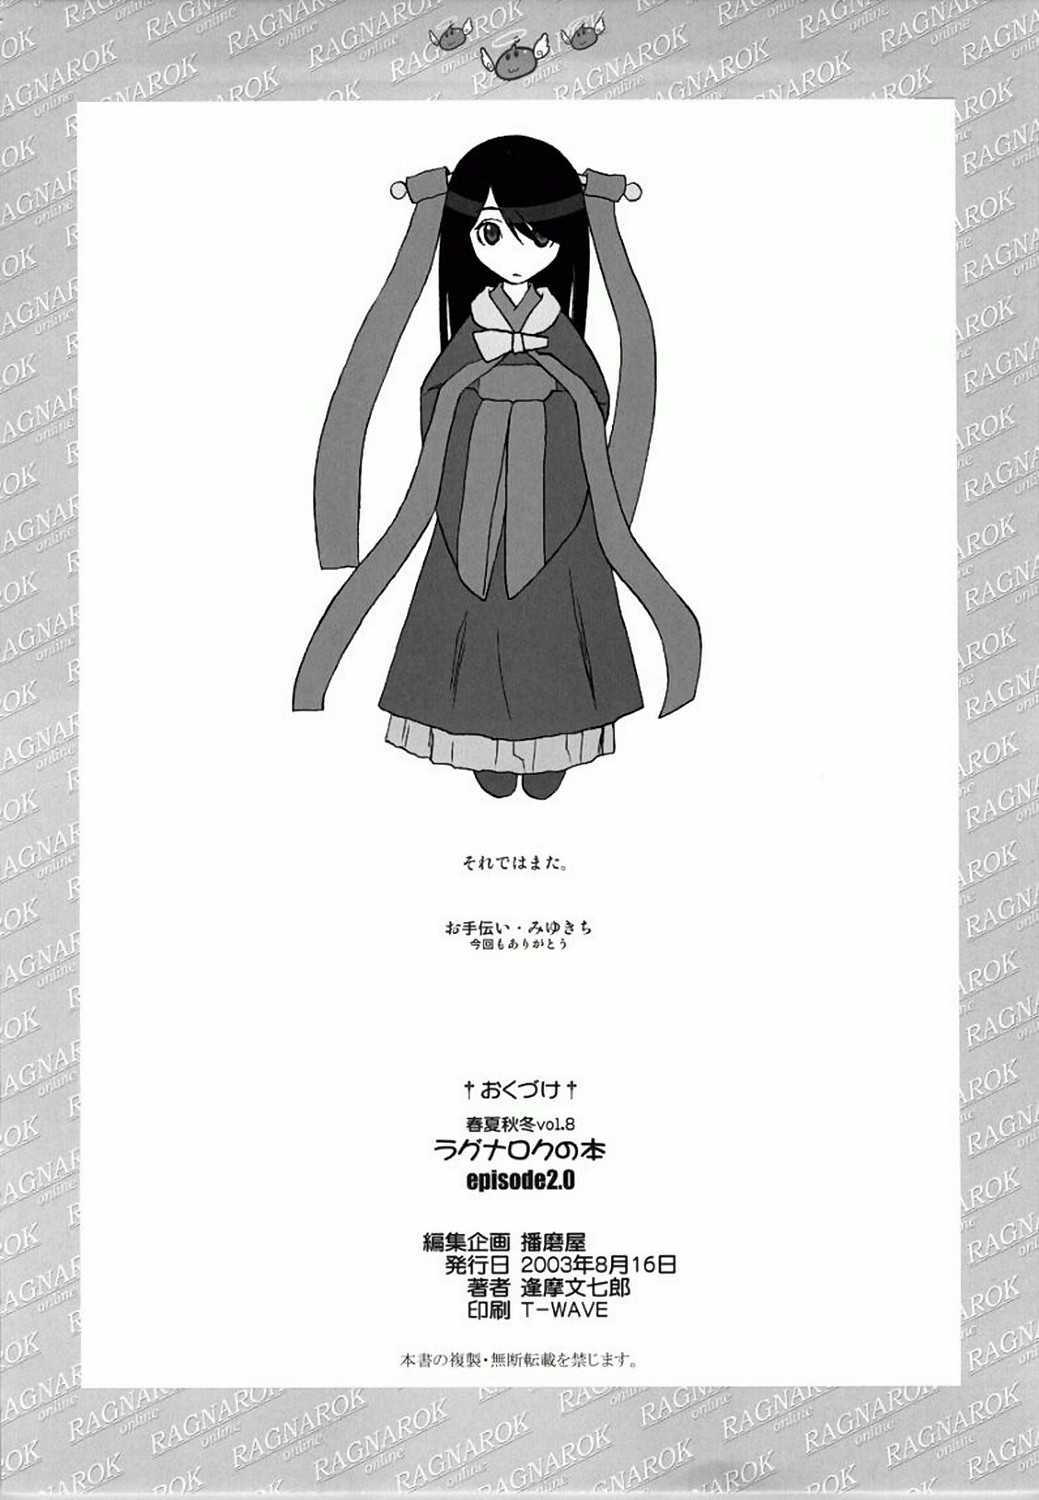 [Harimaya] Shunkashuutou vol.8 episode2.0 (Ragnarok Online) G:同人誌[播磨屋] 春夏秋冬 vol.8 episode2.0 (ラグナロクオンライン)